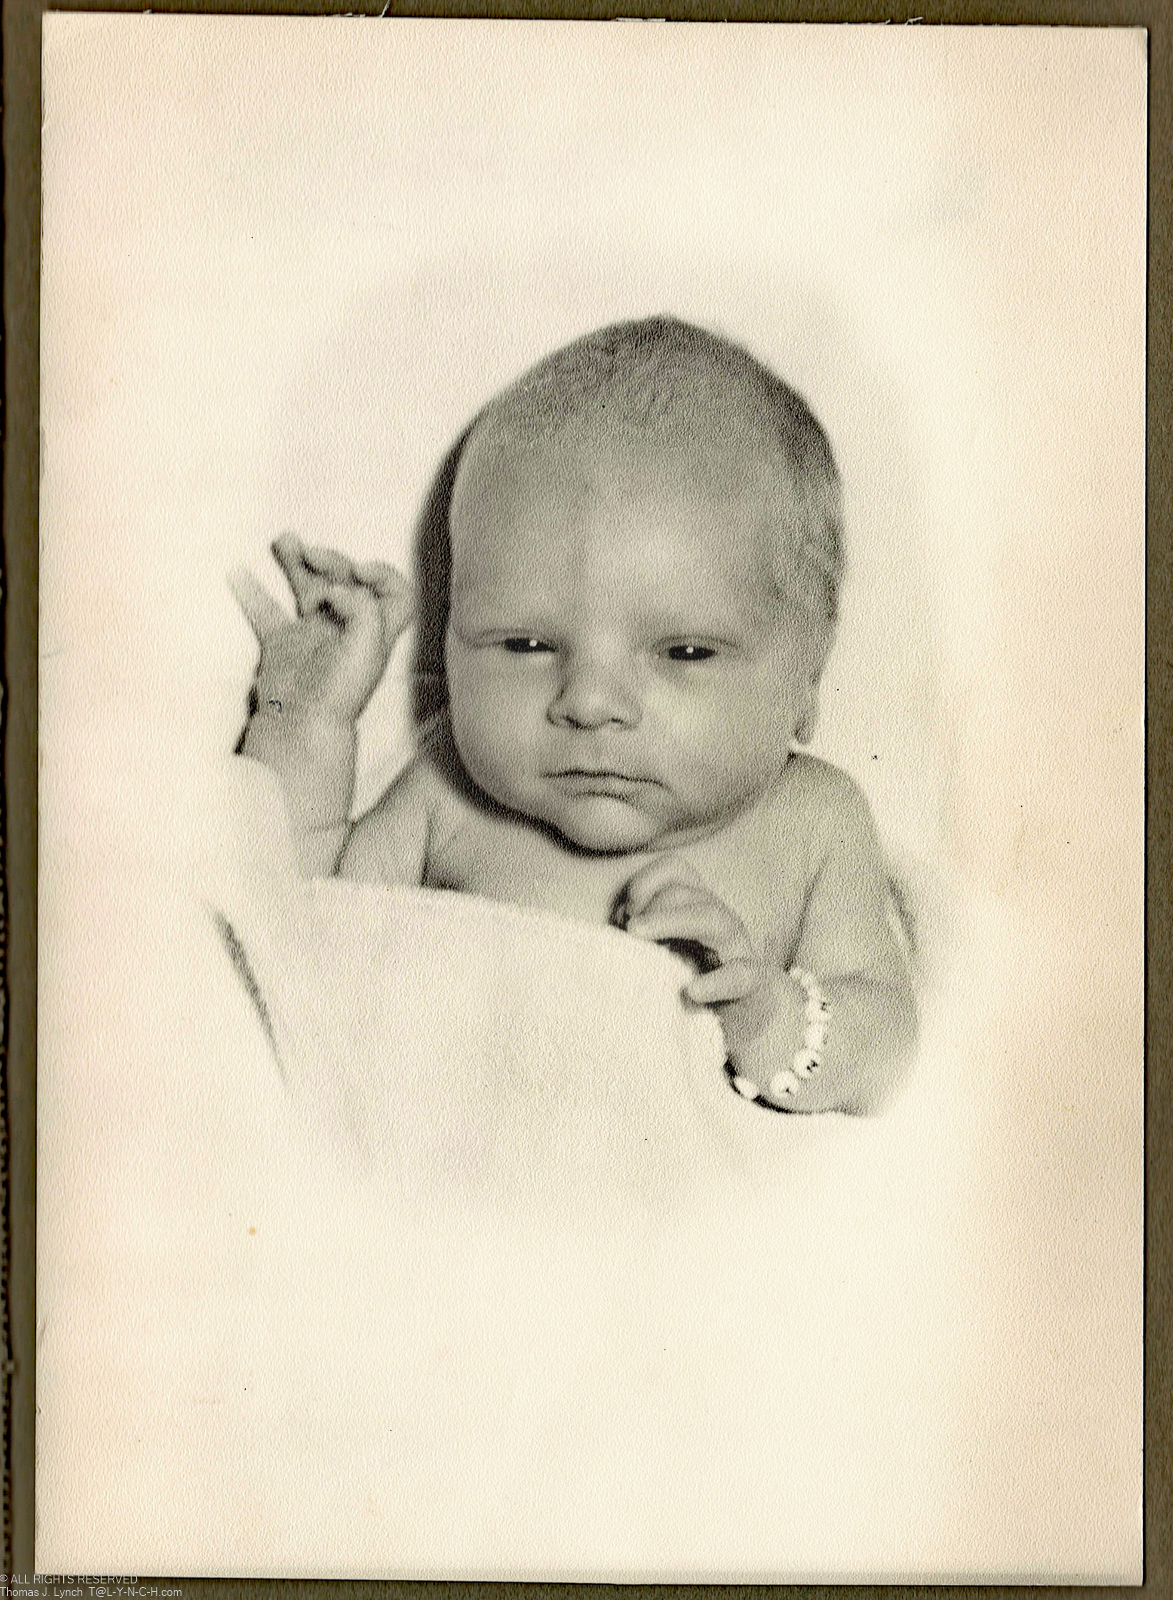 Thomas John Lynch August 16 1959.jpg  ~~  Look at that little cutie??  A spinless chicken per Granny.